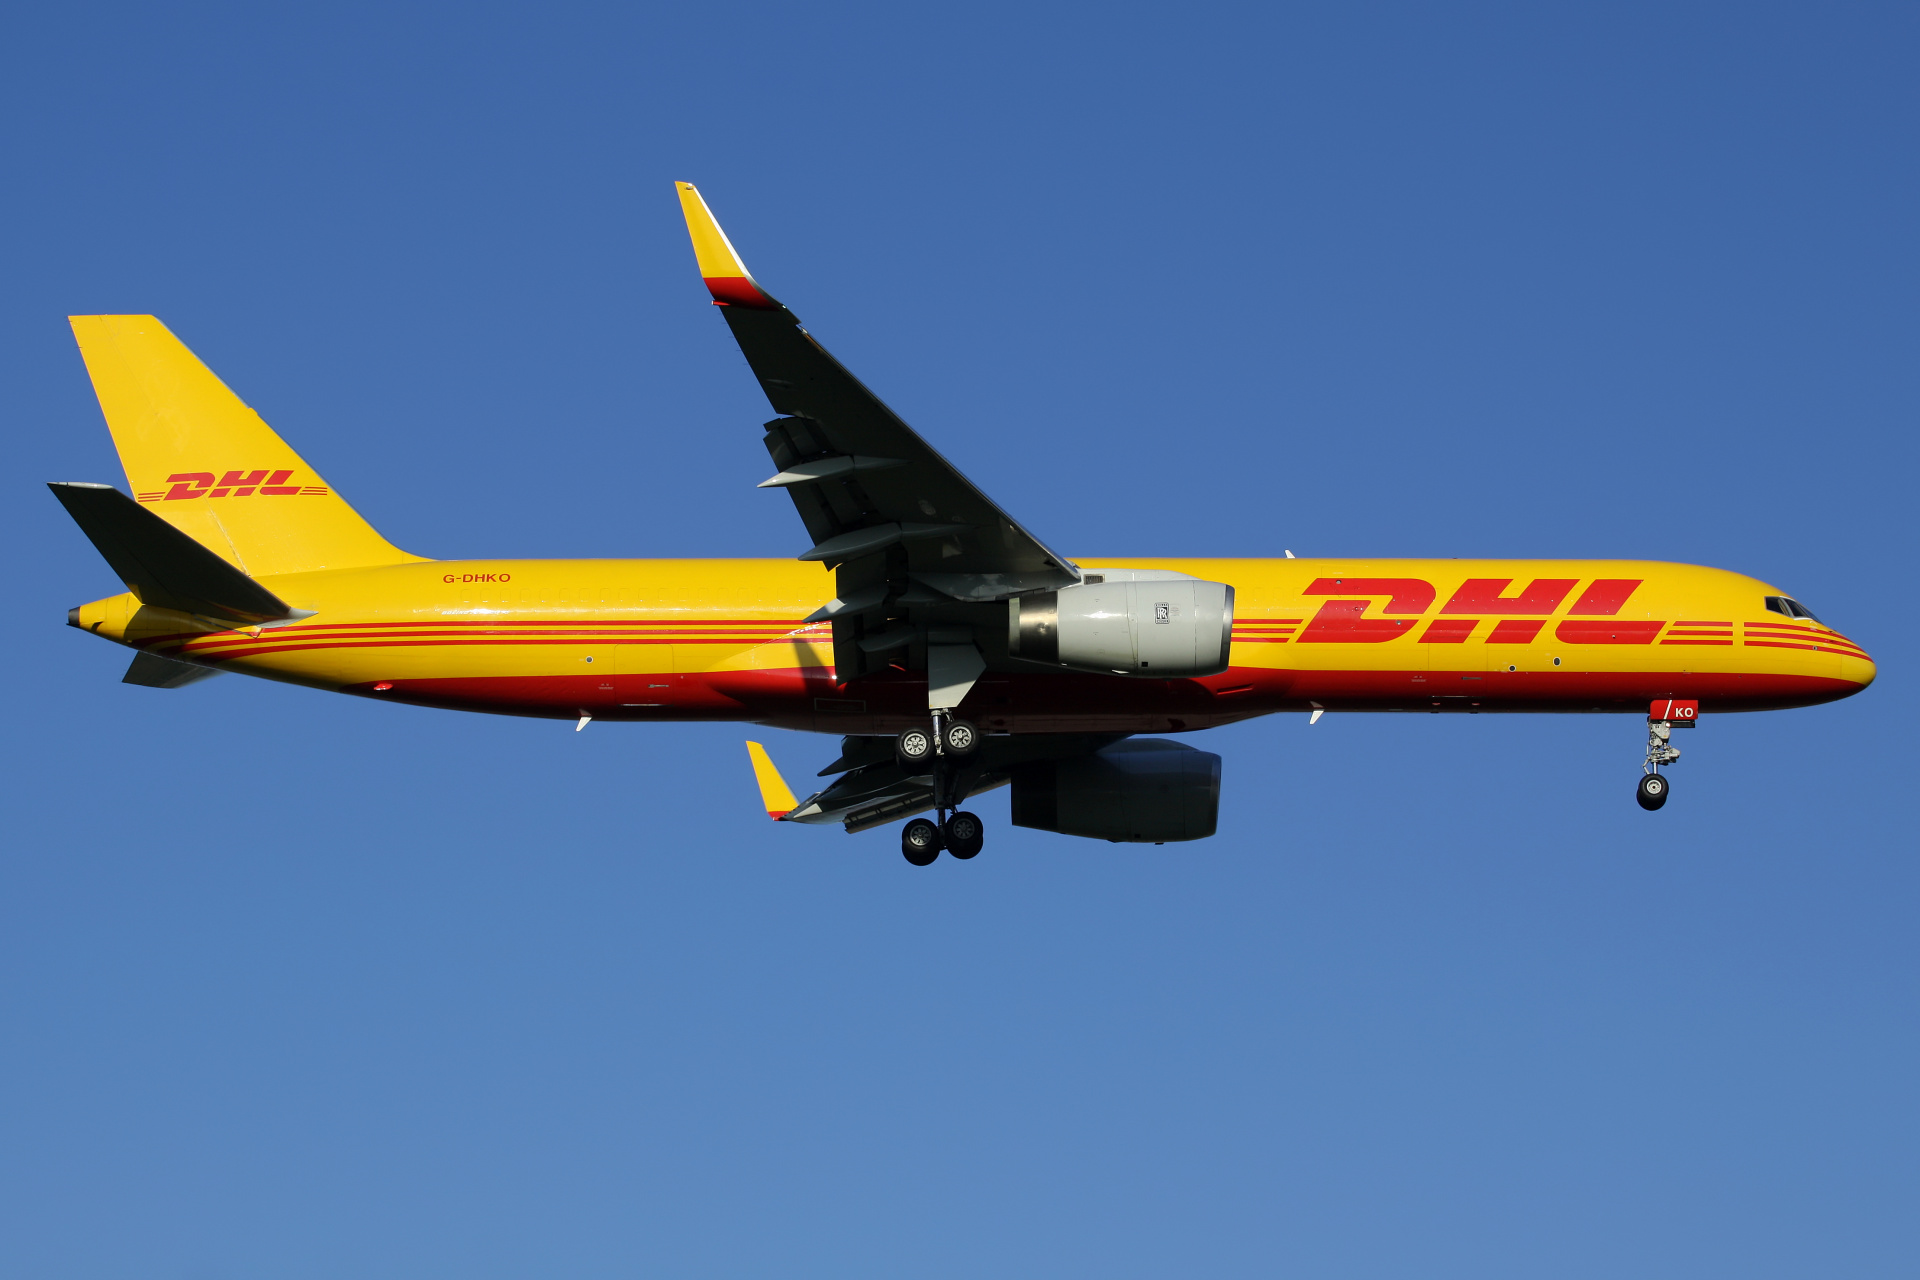 PCF, G-DHKO, DHL Air (Aircraft » EPWA Spotting » Boeing 757-200F » DHL)